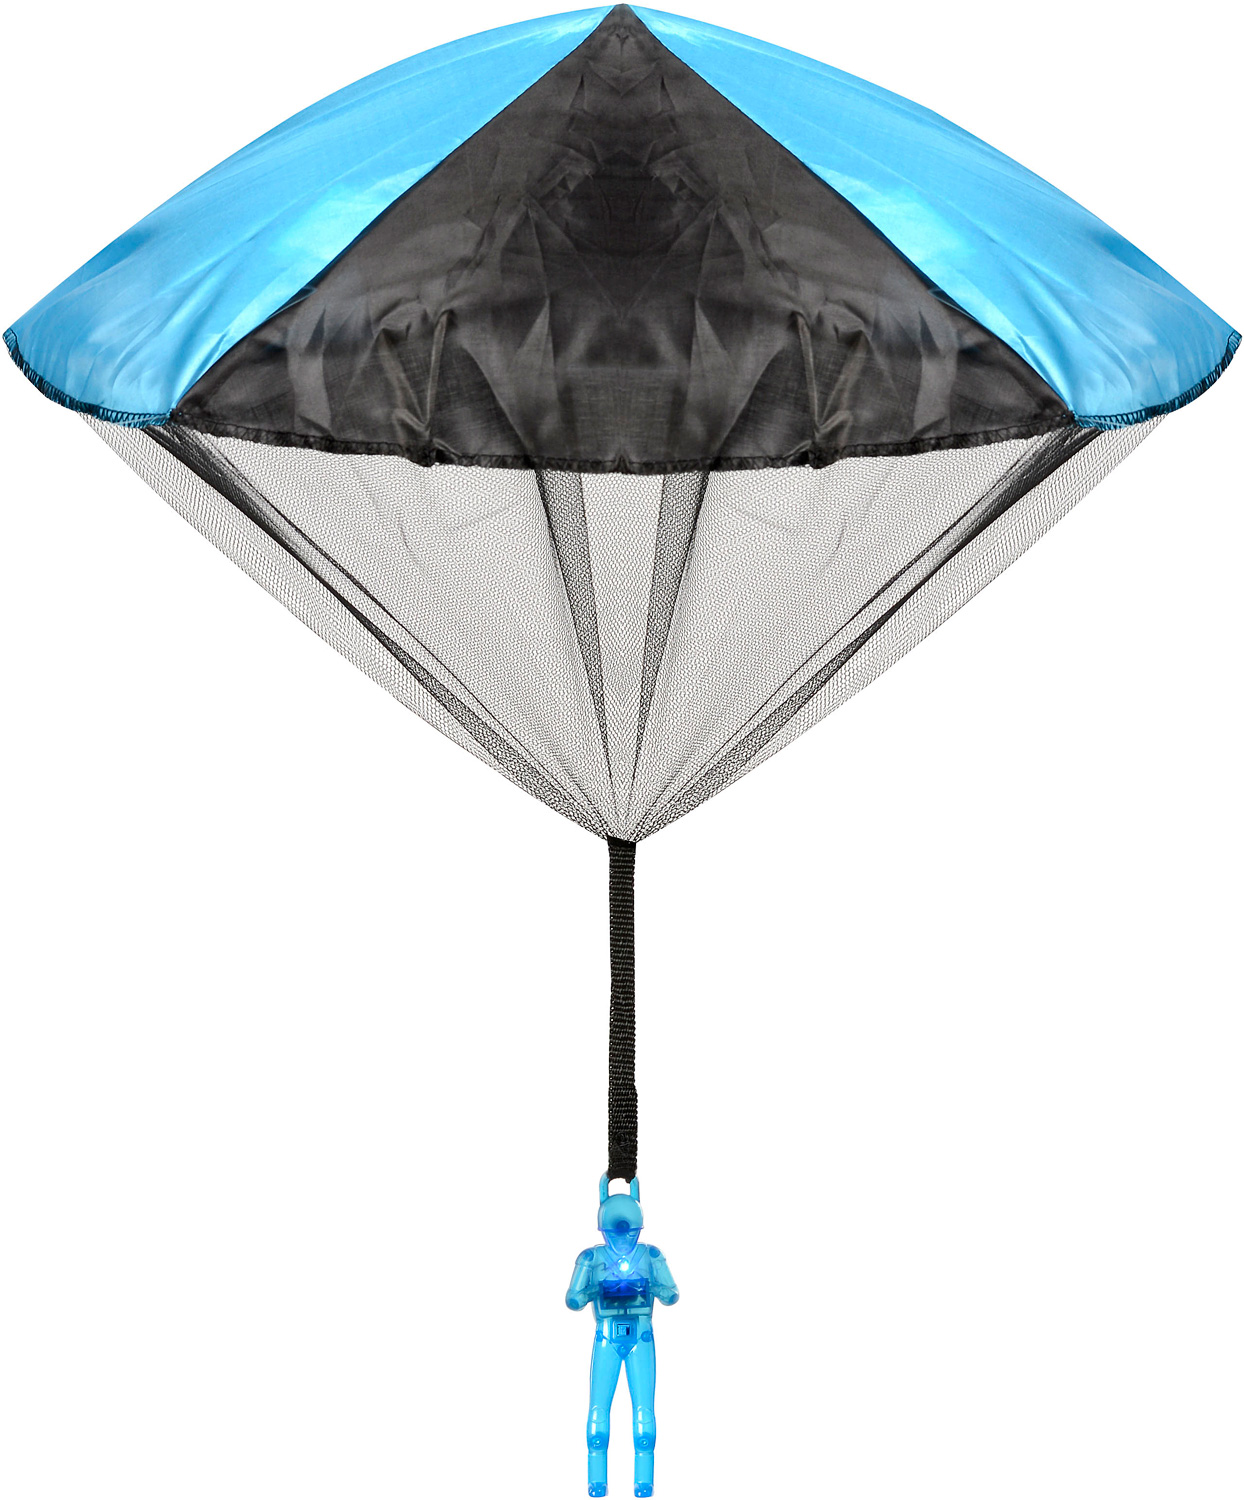 2 pack Aeromax Original Tangle Free Toy Parachute 